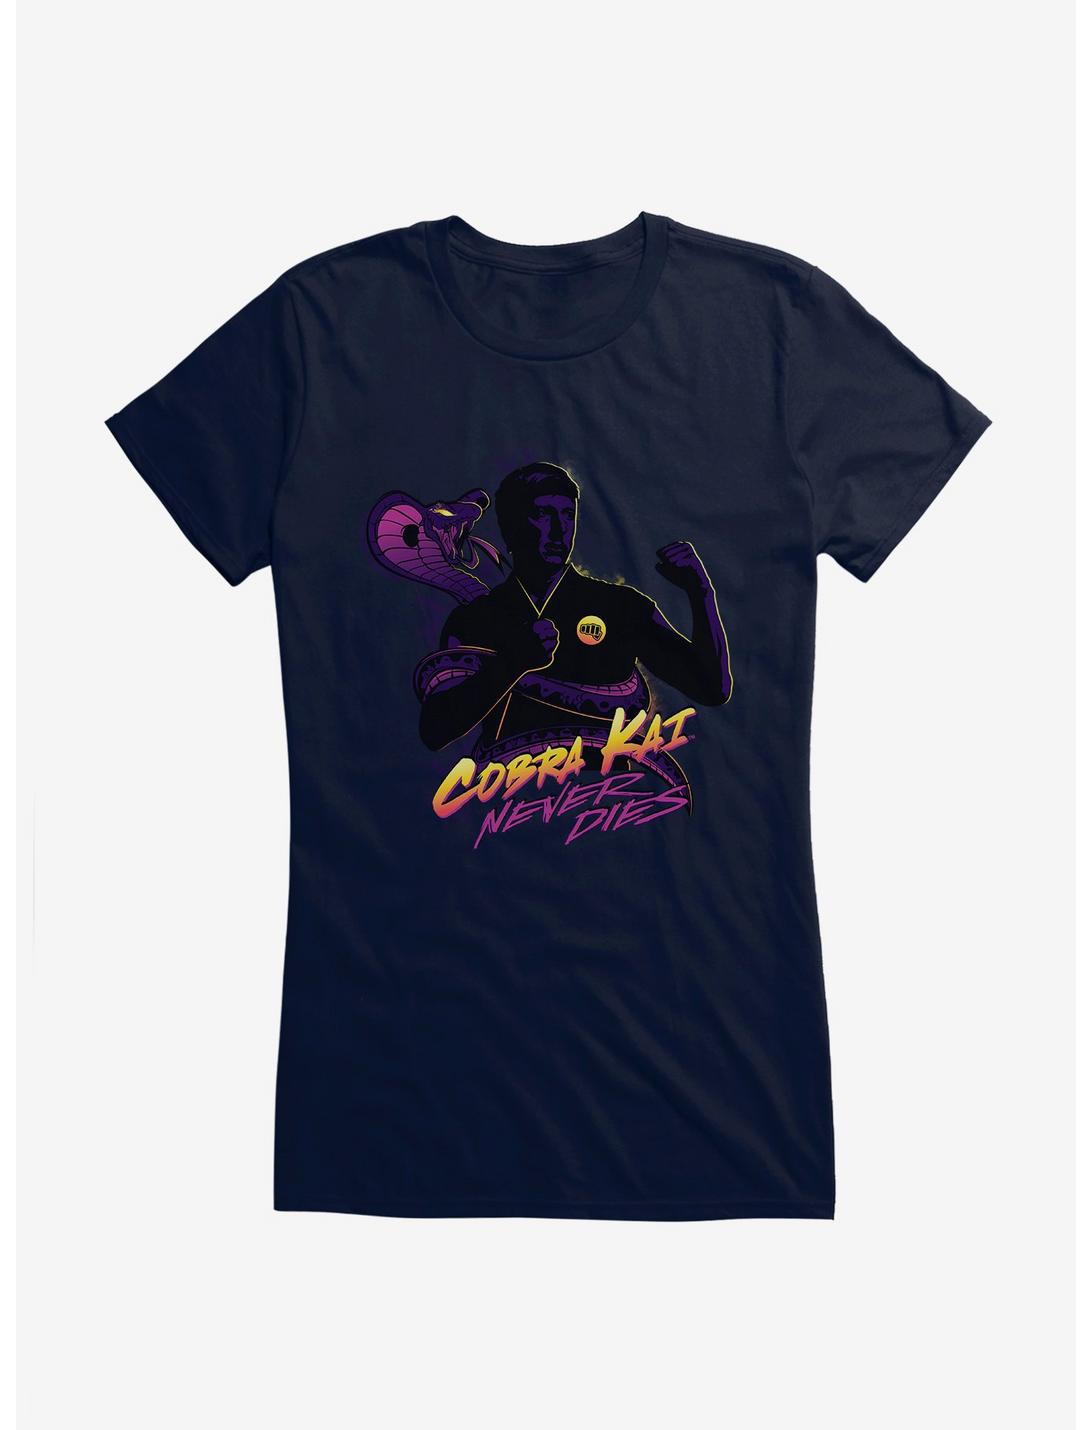 Cobra Kai Never Dies Fist Girls T-Shirt, NAVY, hi-res